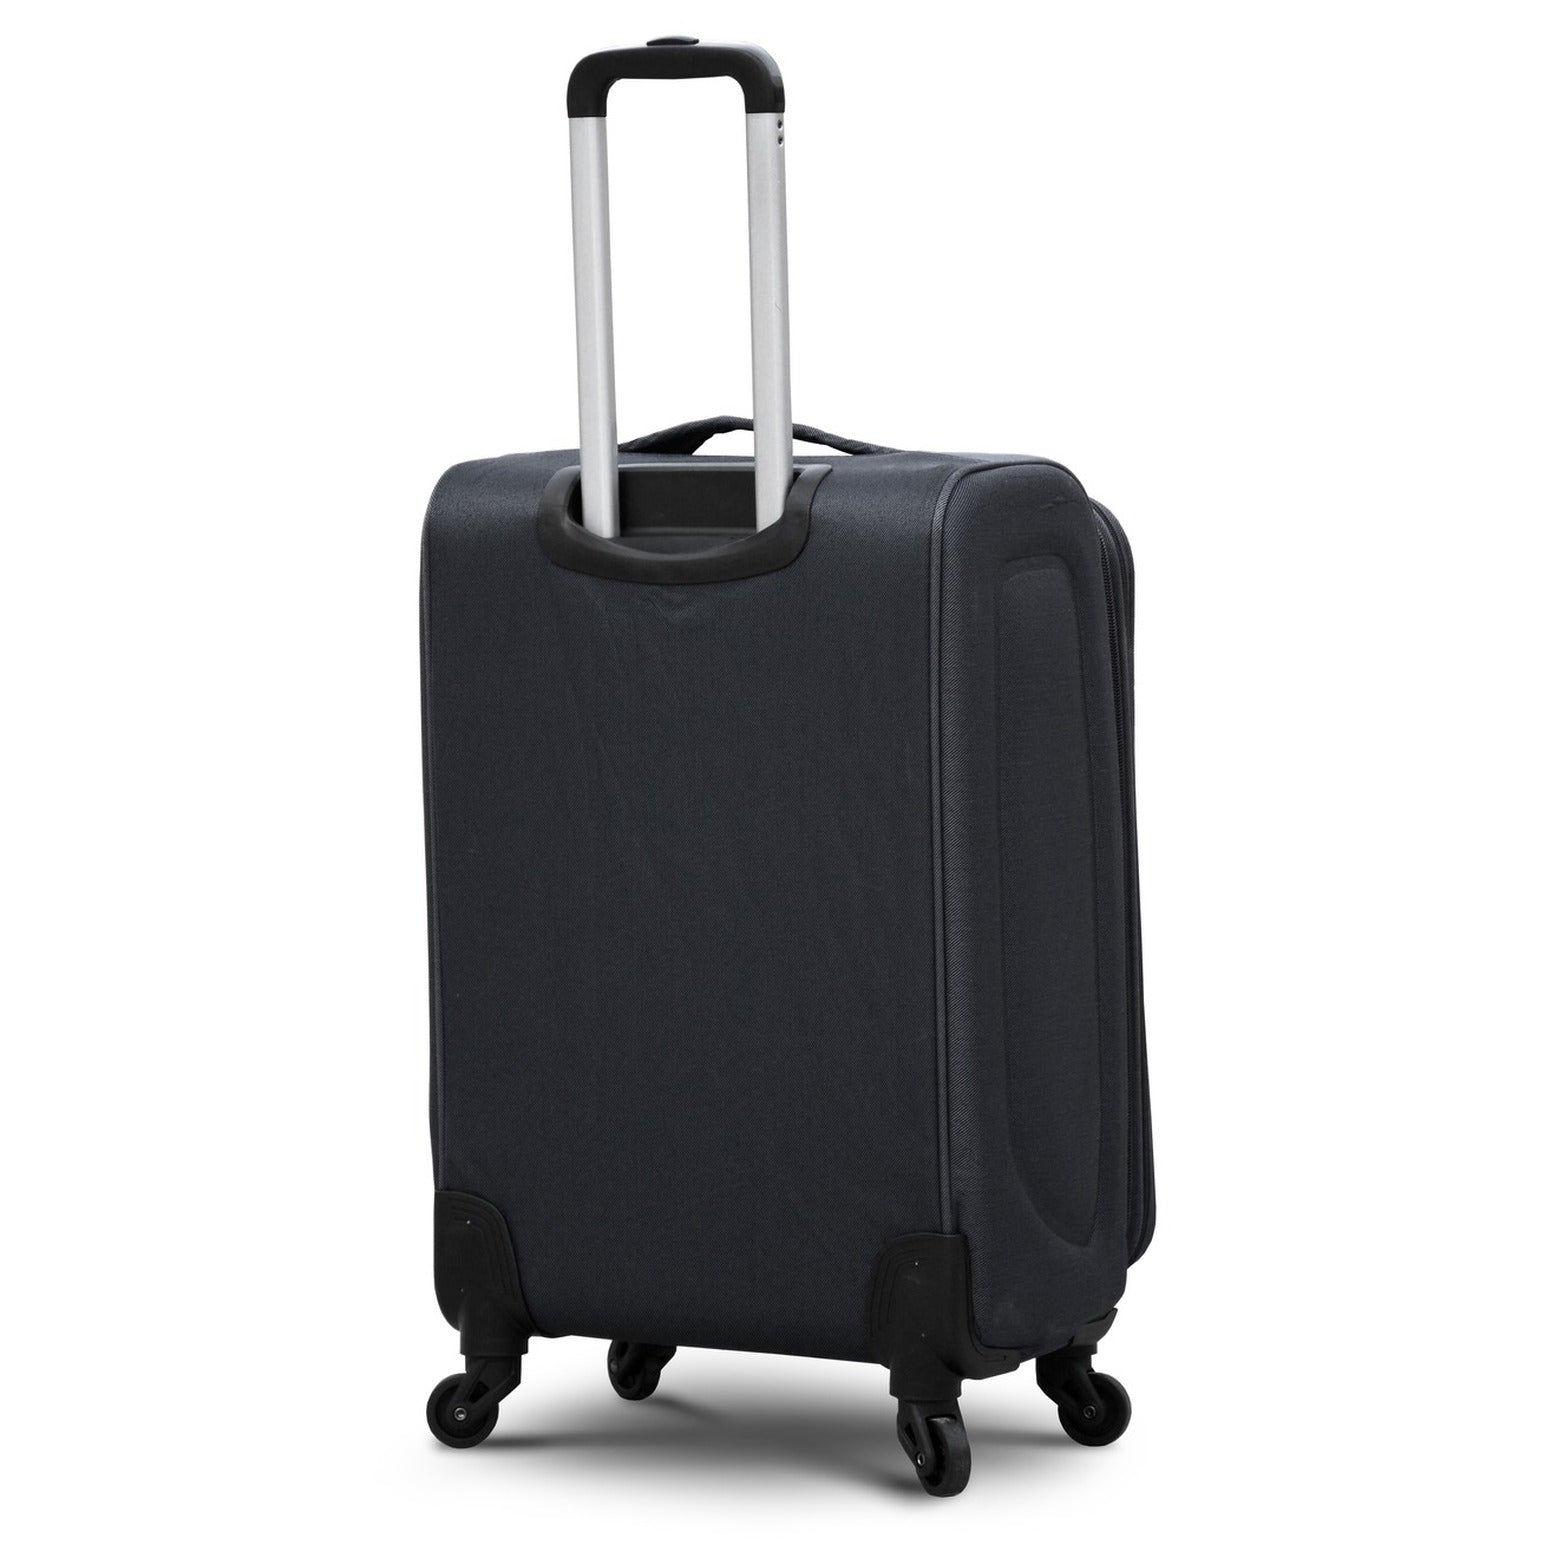 20" Black Colour SJ JIAN 4 Wheel Luggage Lightweight Soft Material Carry On Trolley Bag Zaappy.com